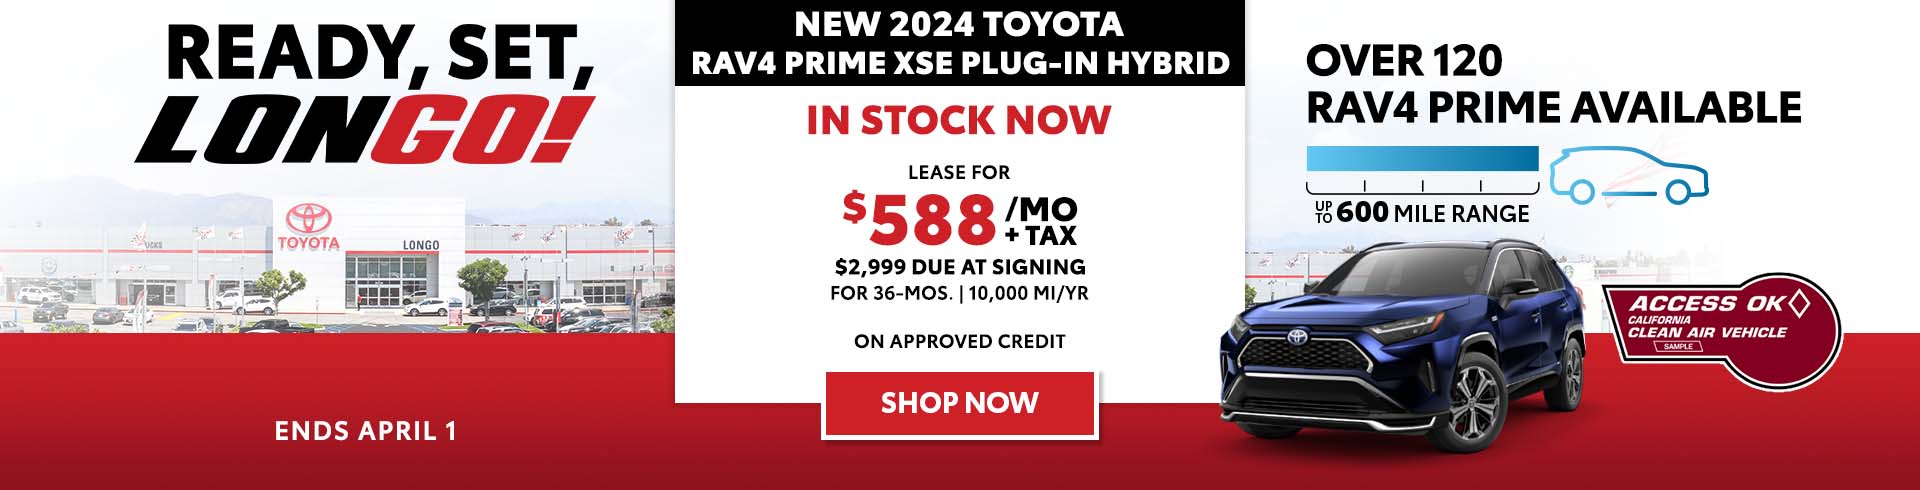 Lease a New 2024 Toyota RAV4 Prime XSE